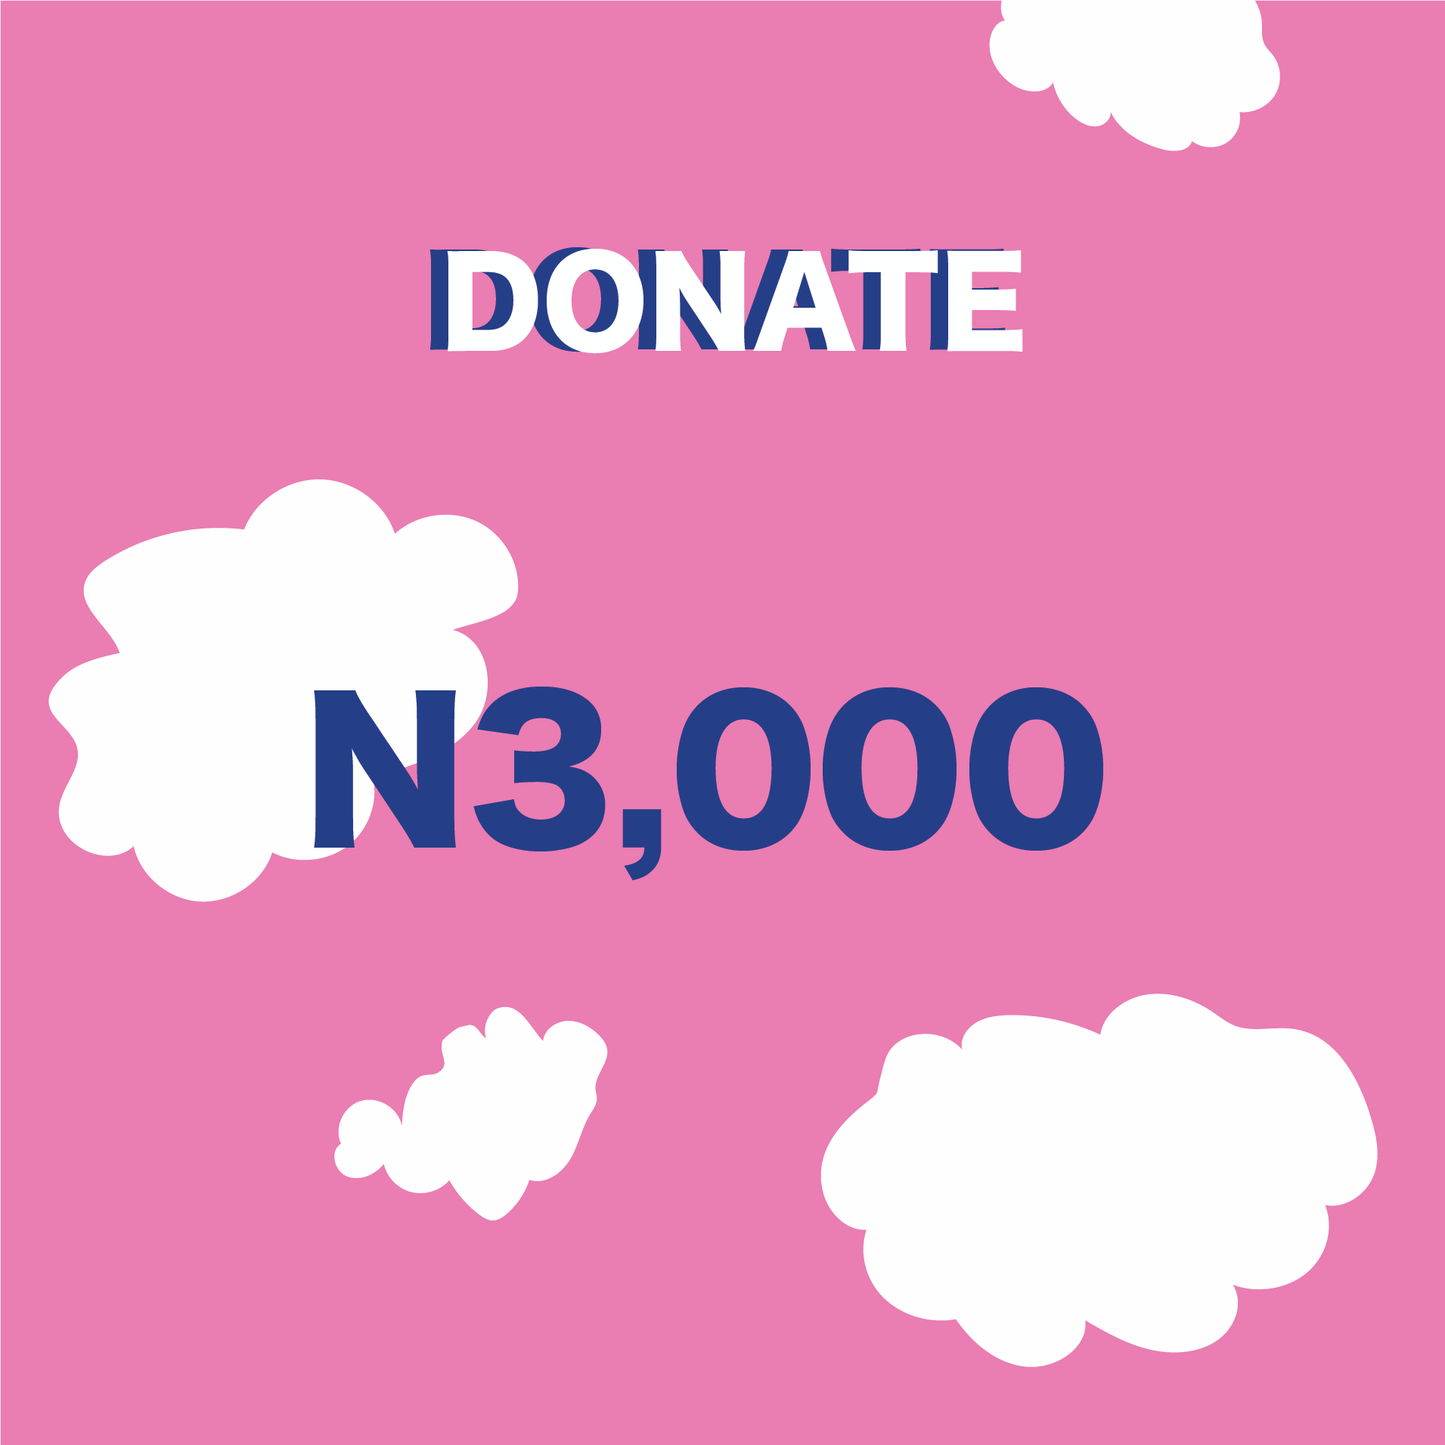 Donate N3000